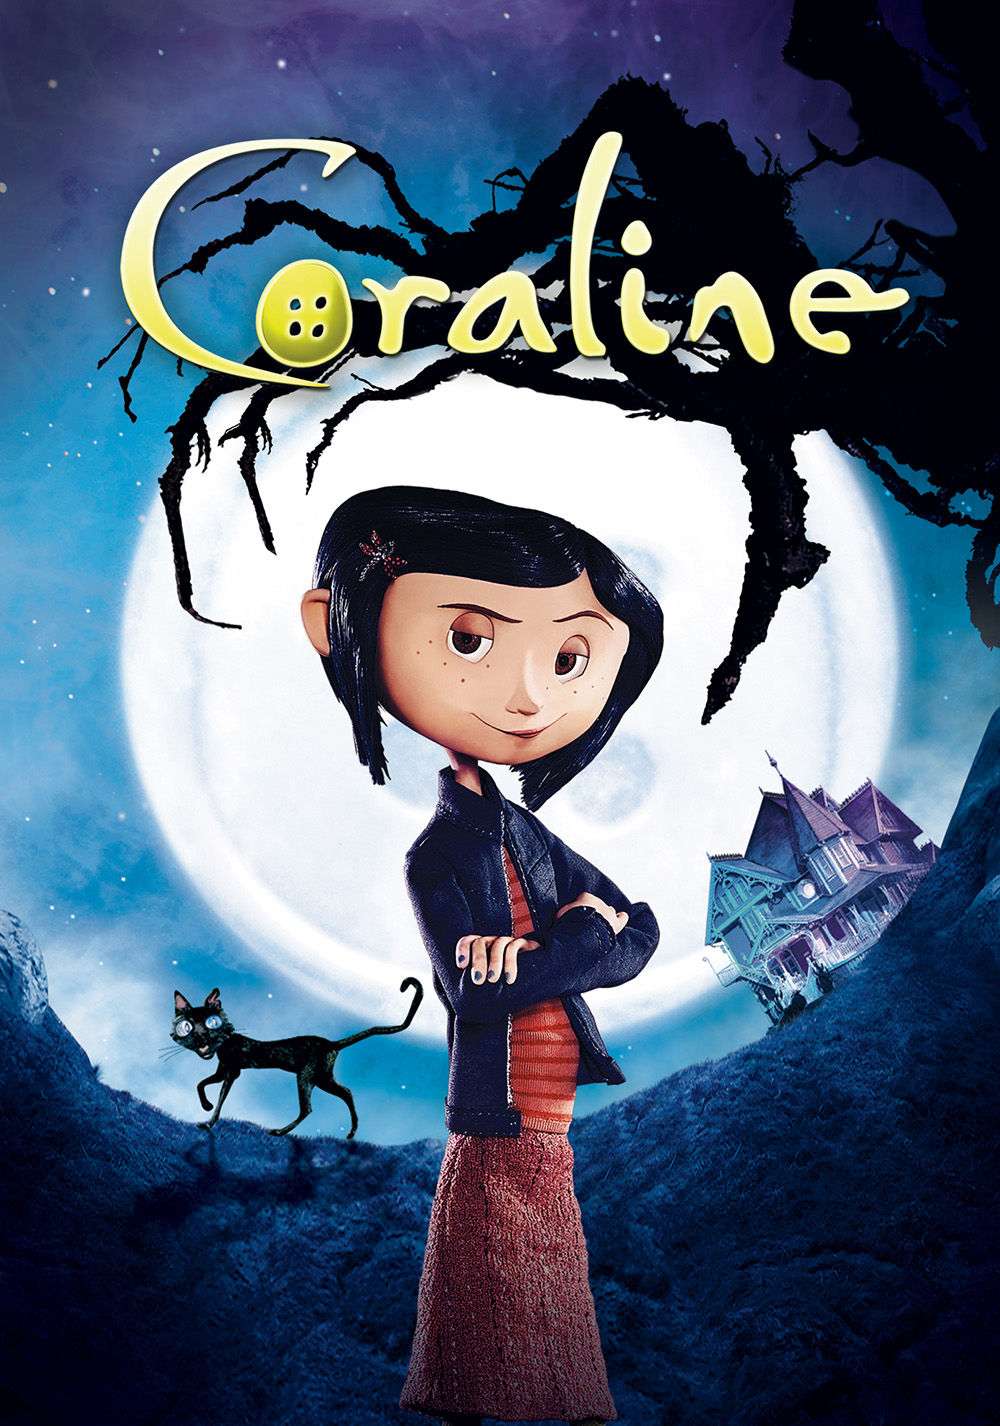 Colin Mulhern: Coraline: Book vs Movie